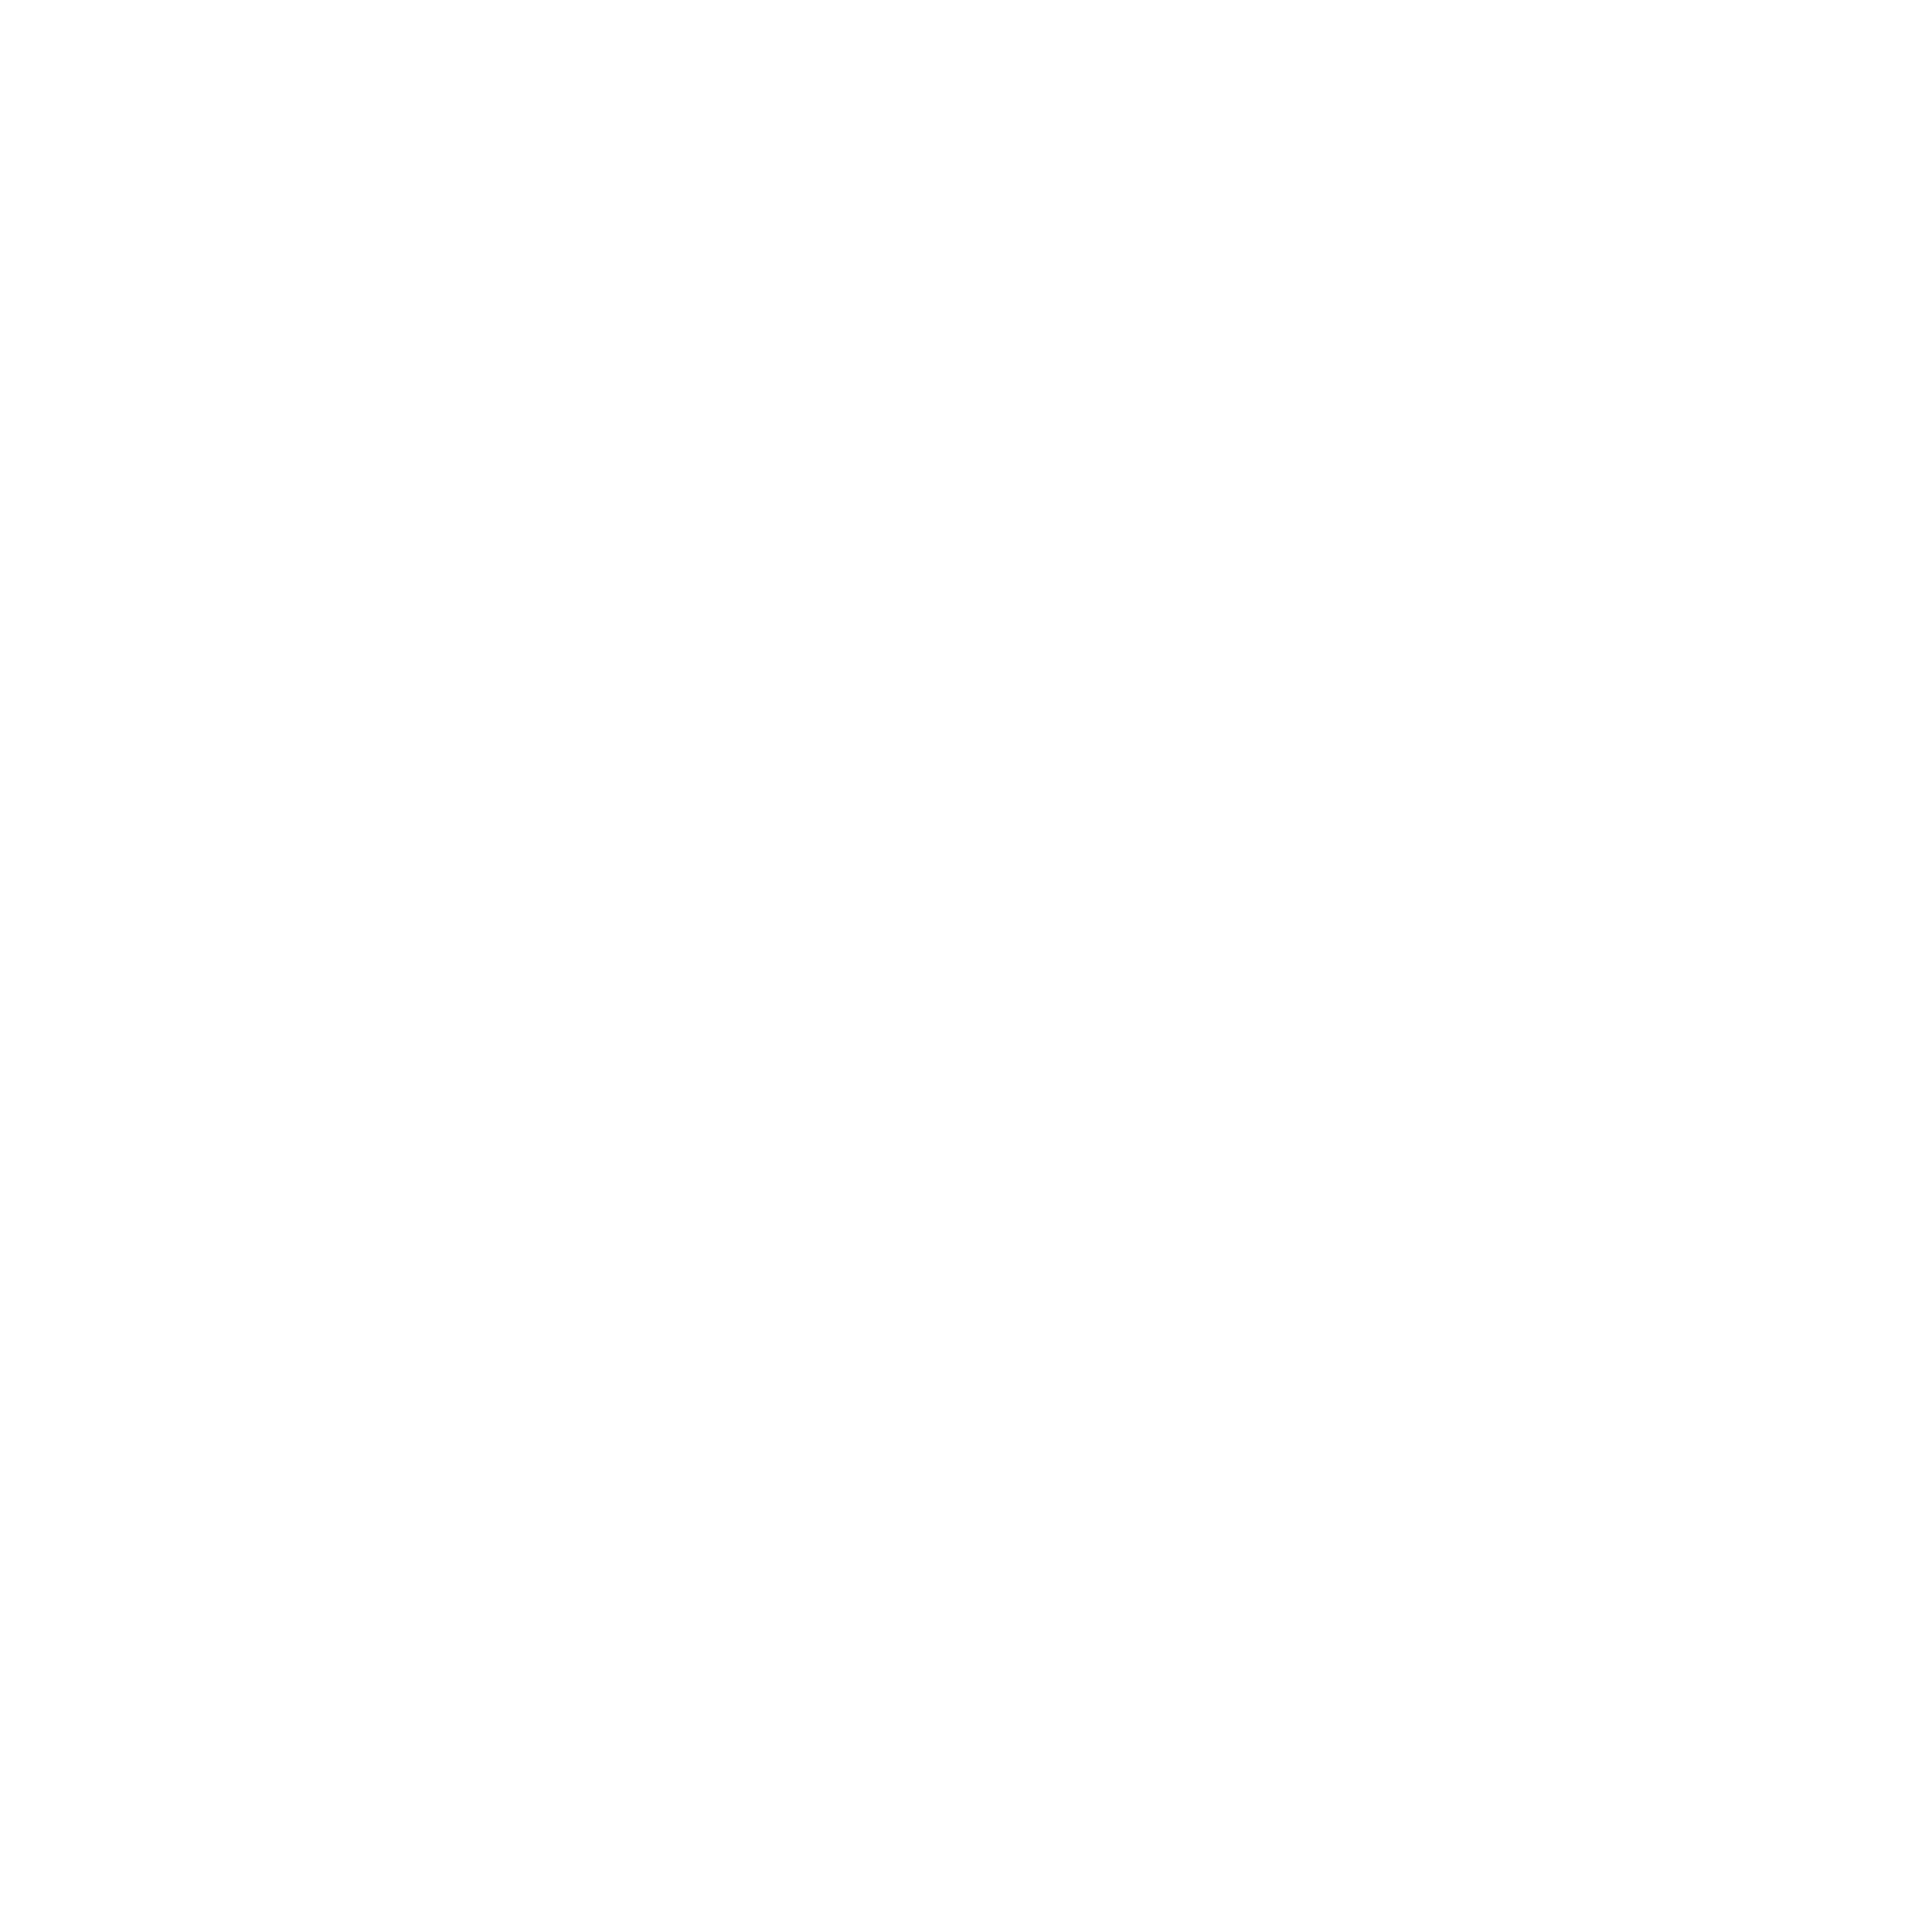 HDI Logo - HDI Logo PNG Transparent & SVG Vector - Freebie Supply